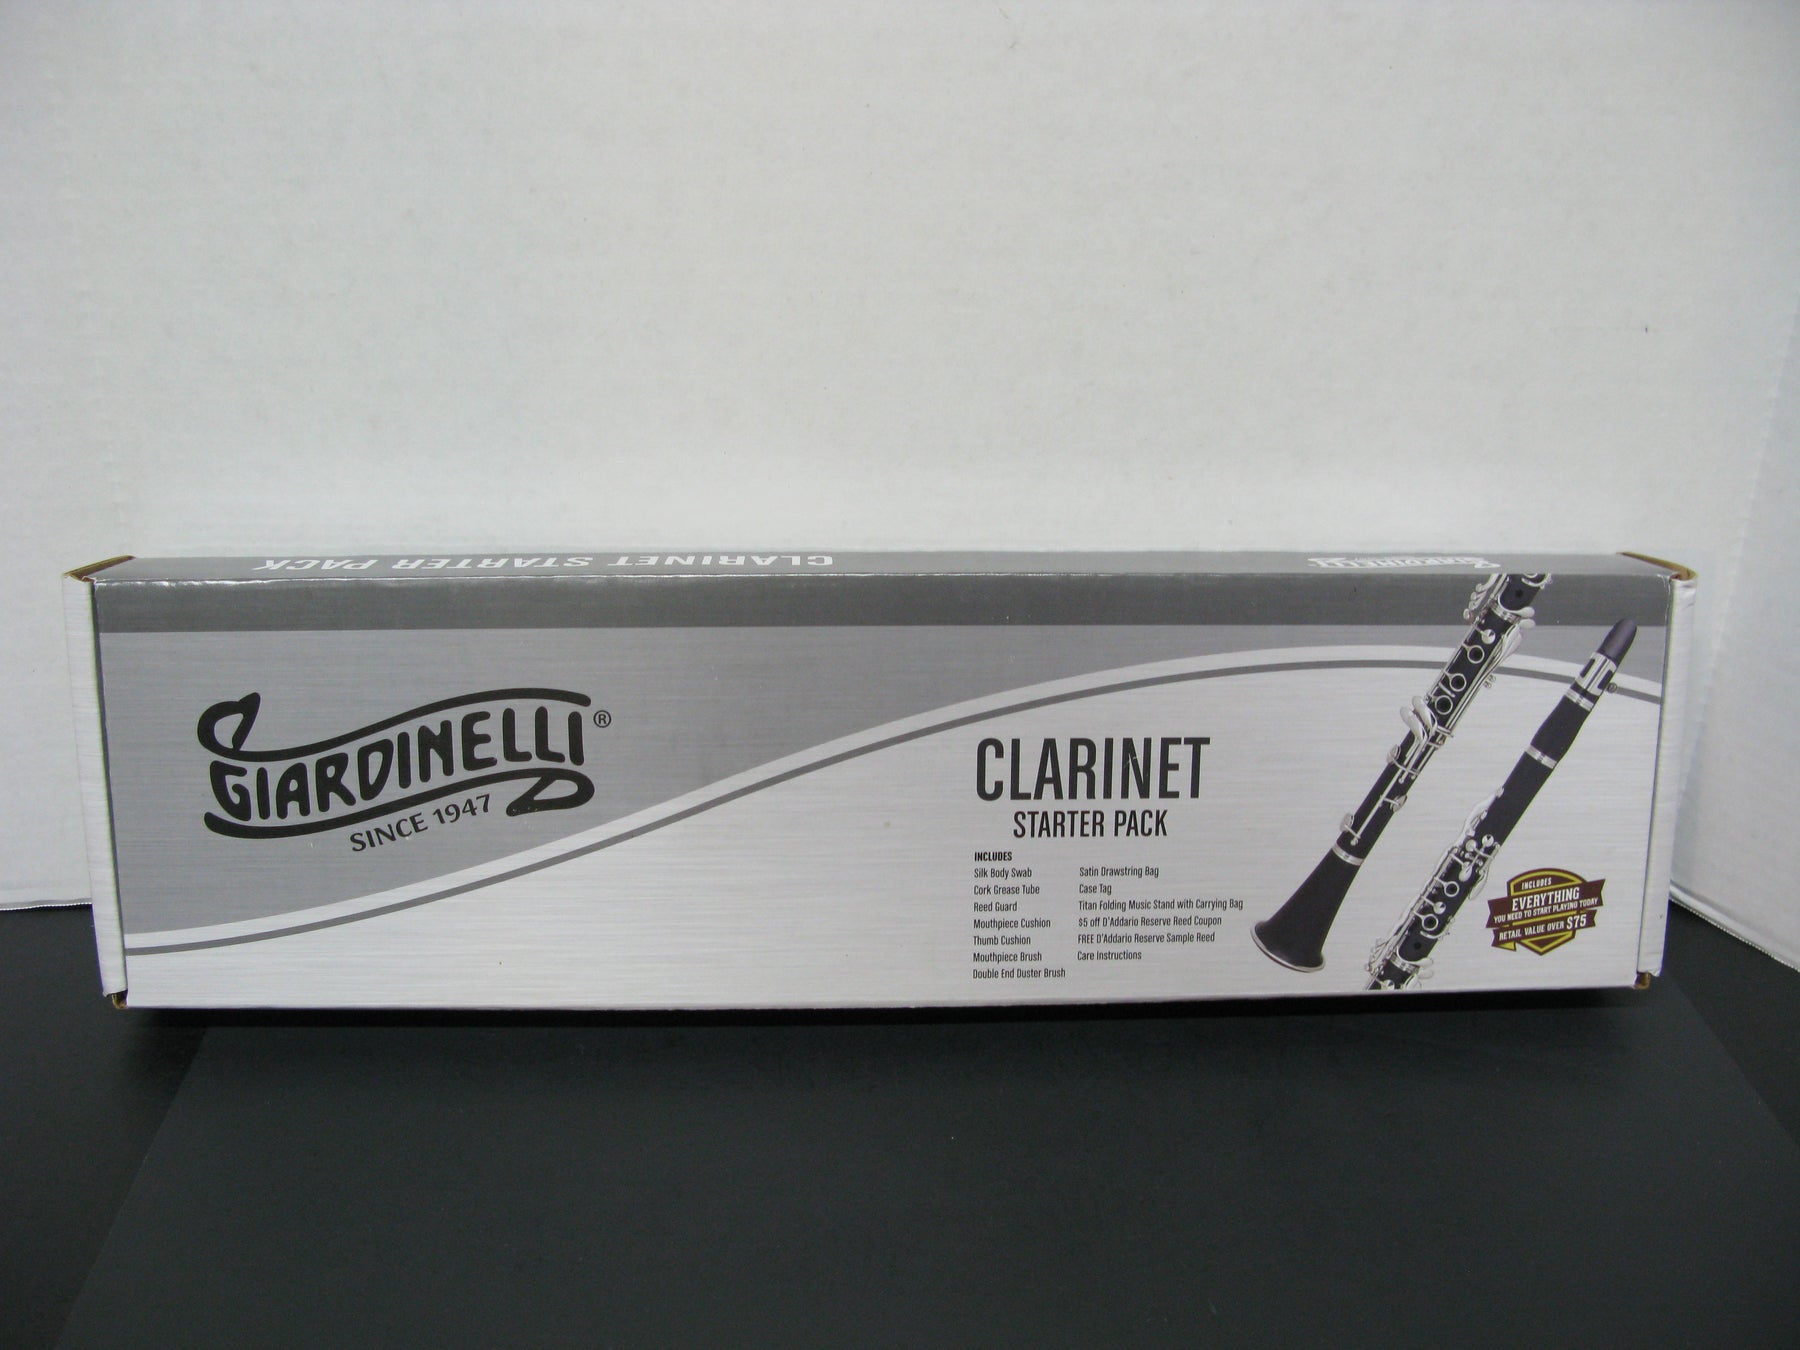 Clarinet Starter Pack